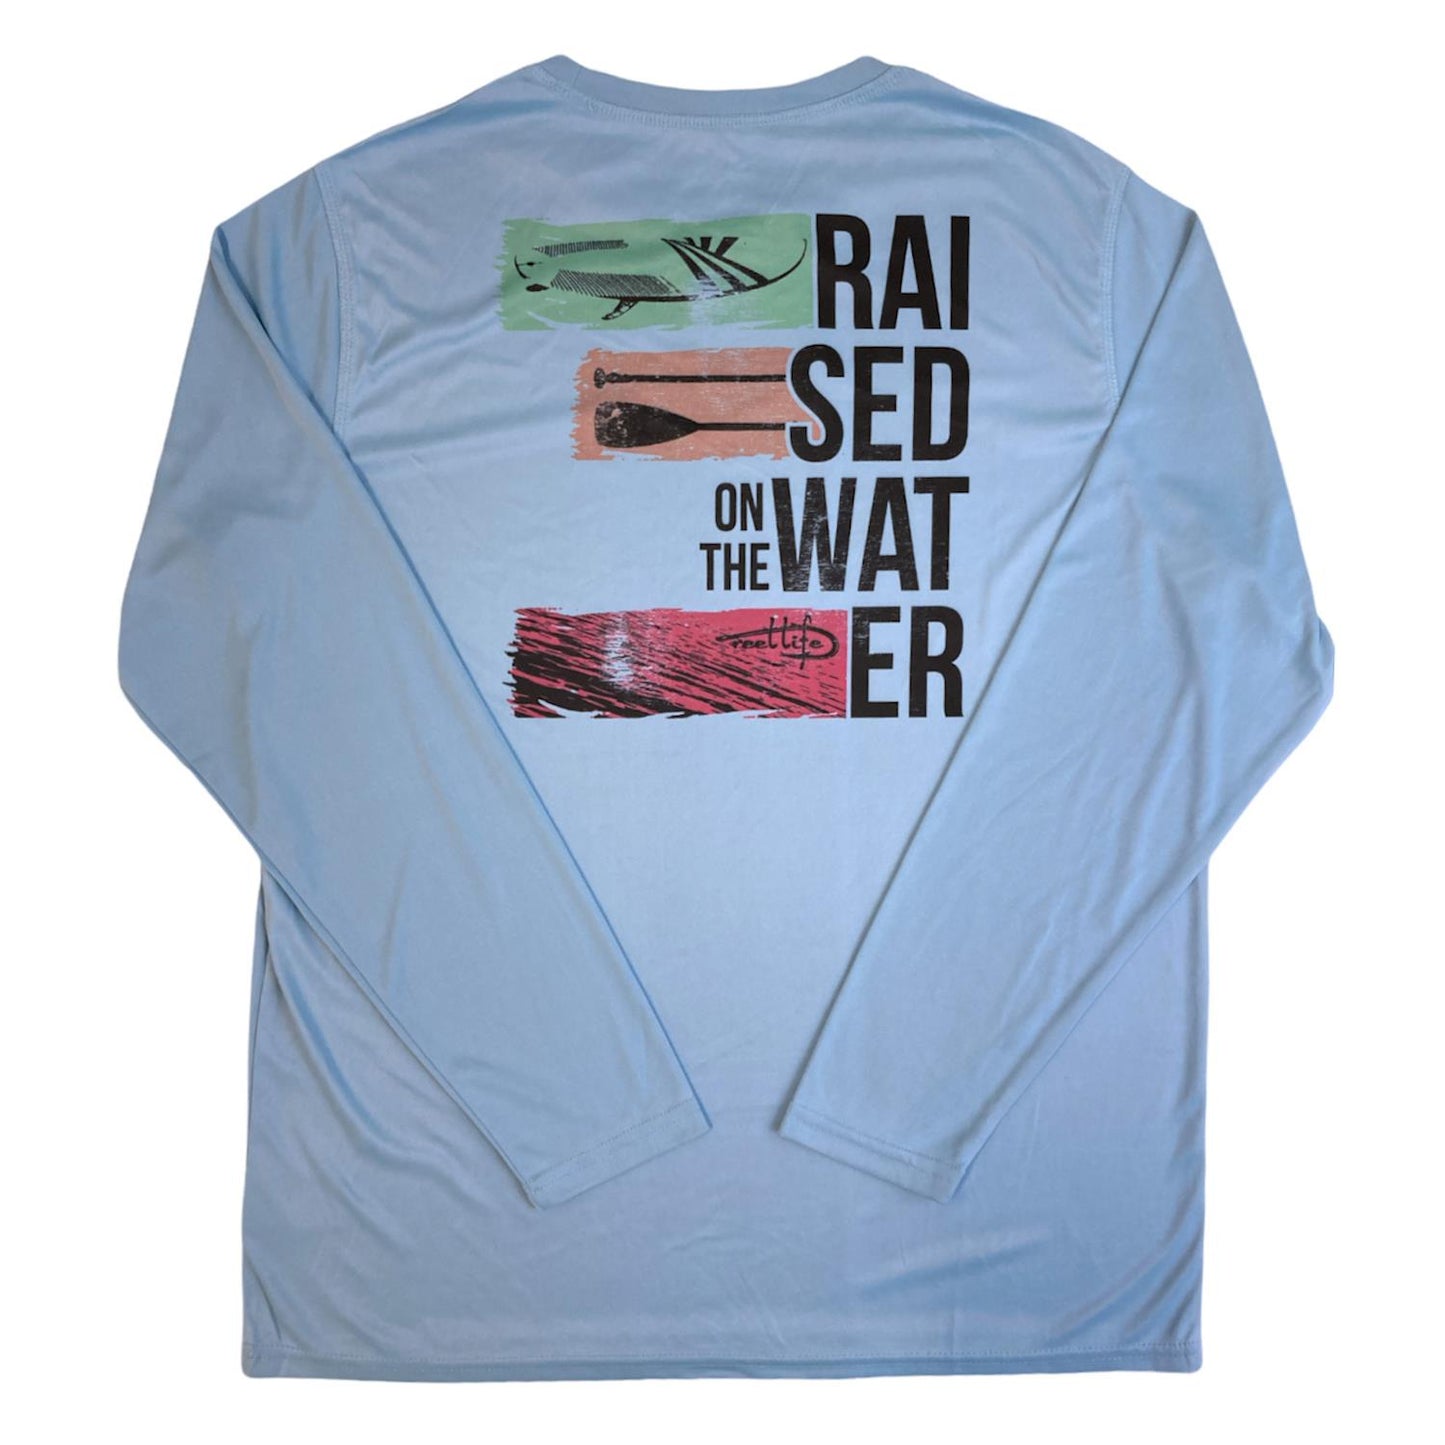 Reel Life Men's Sun Defender Lightweight Long Sleeve UV T-Shirt